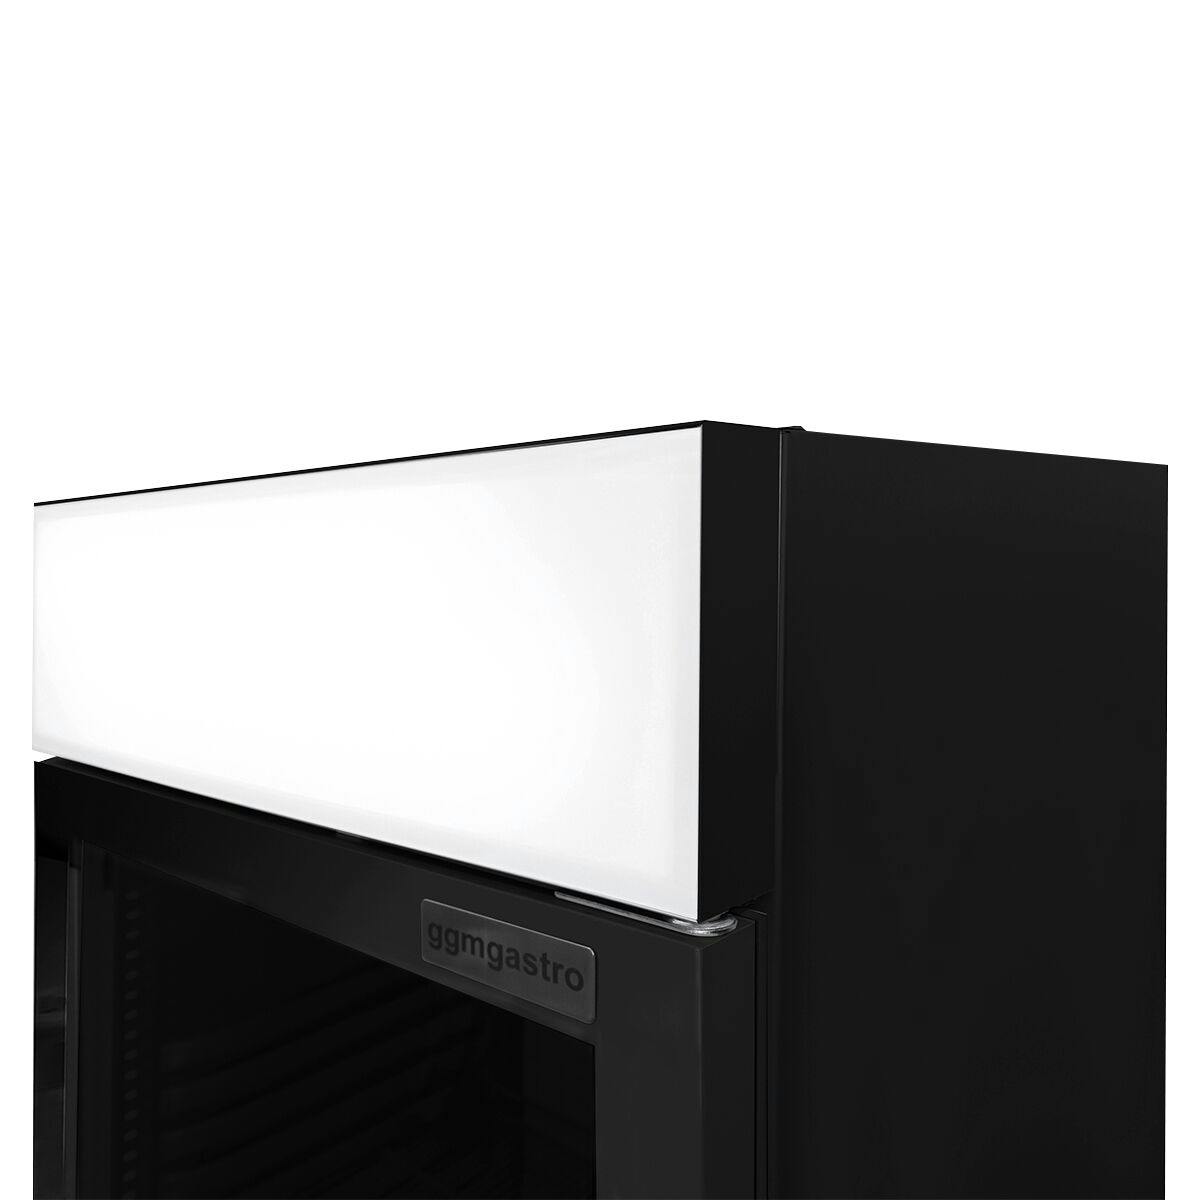 (4 pieces) Beverage refrigerator - 4192 litres (total) - black